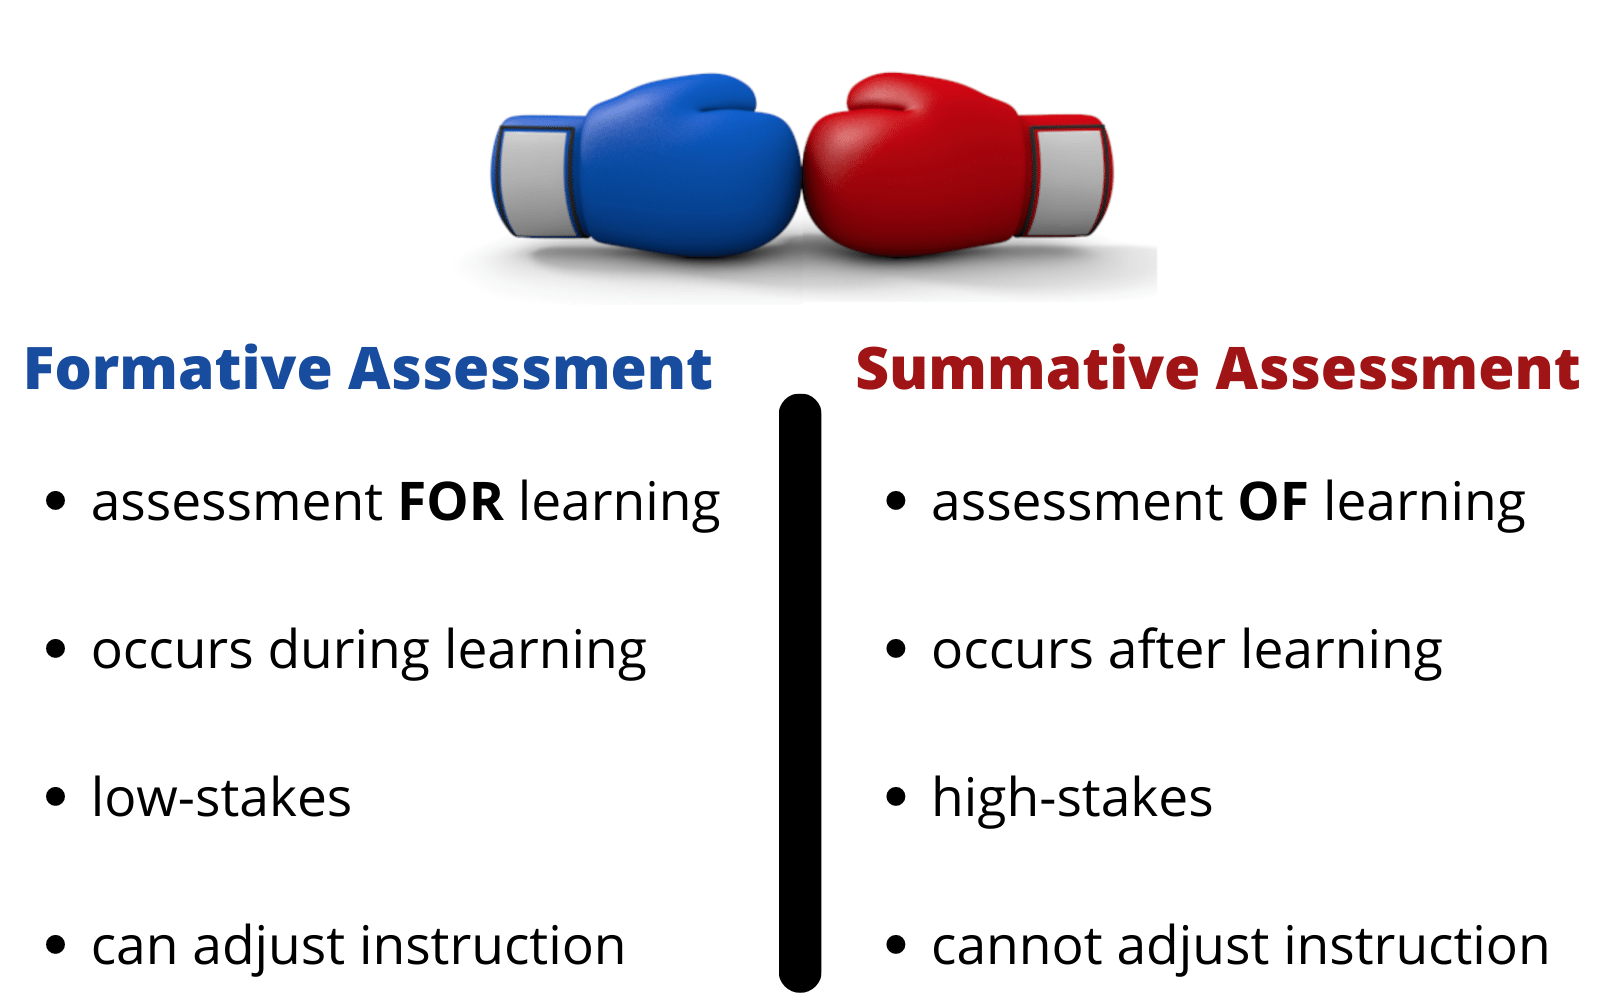 Summative assessment for term